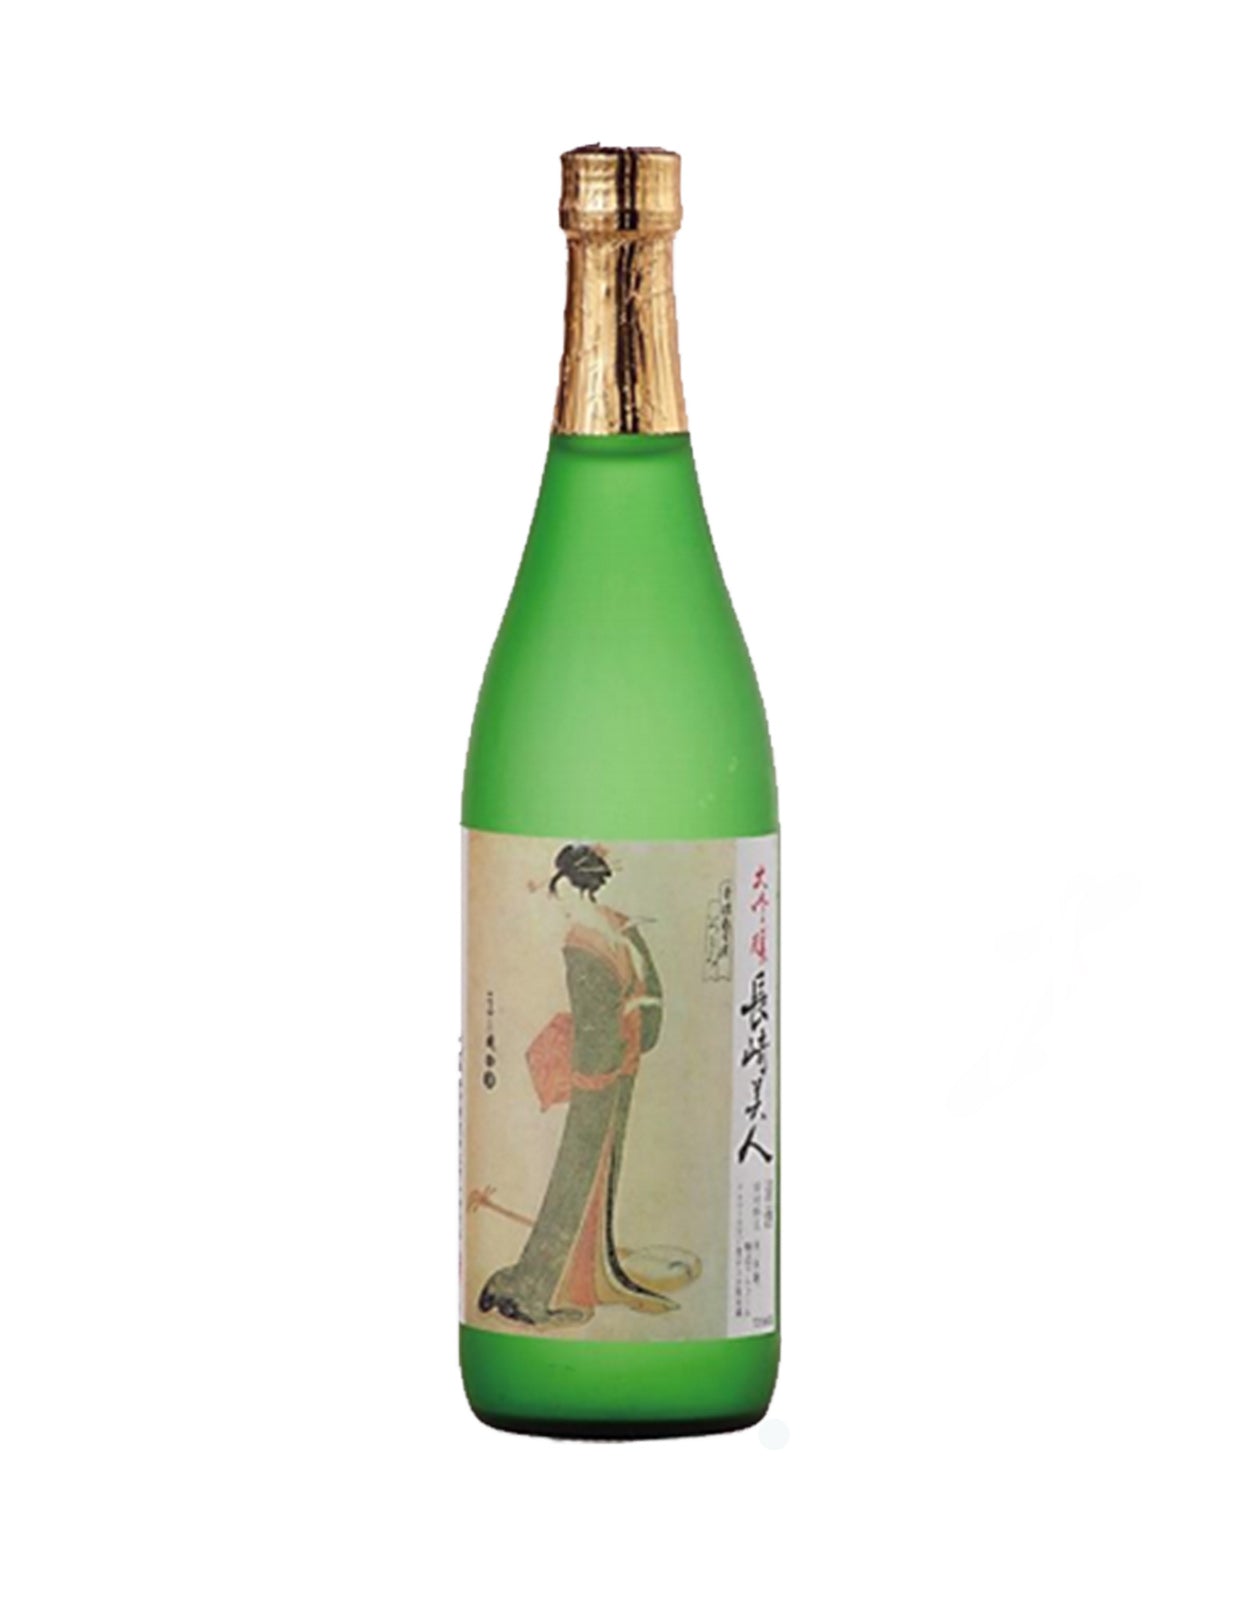 Fukuda Shuzo Nagasaki Bijin Daiginjo - 1.8 Litre Bottle